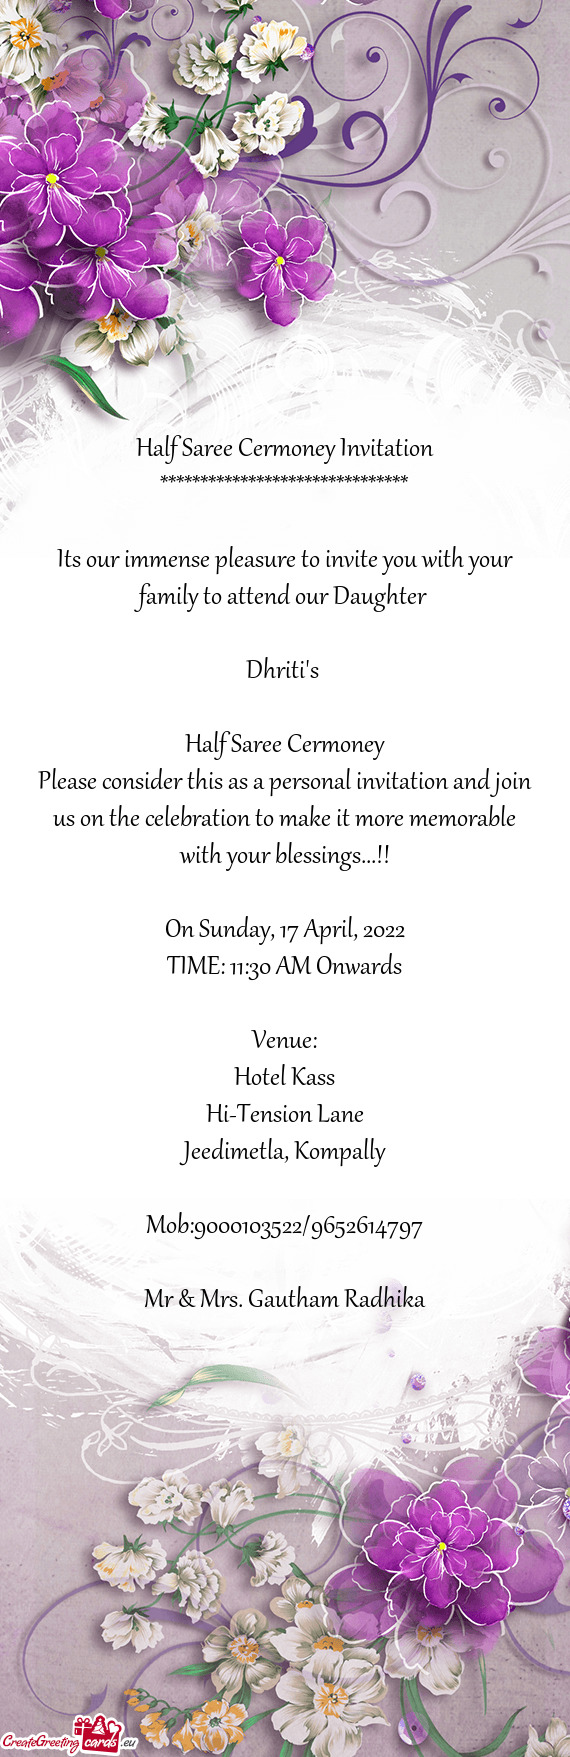 Half Saree Cermoney Invitation